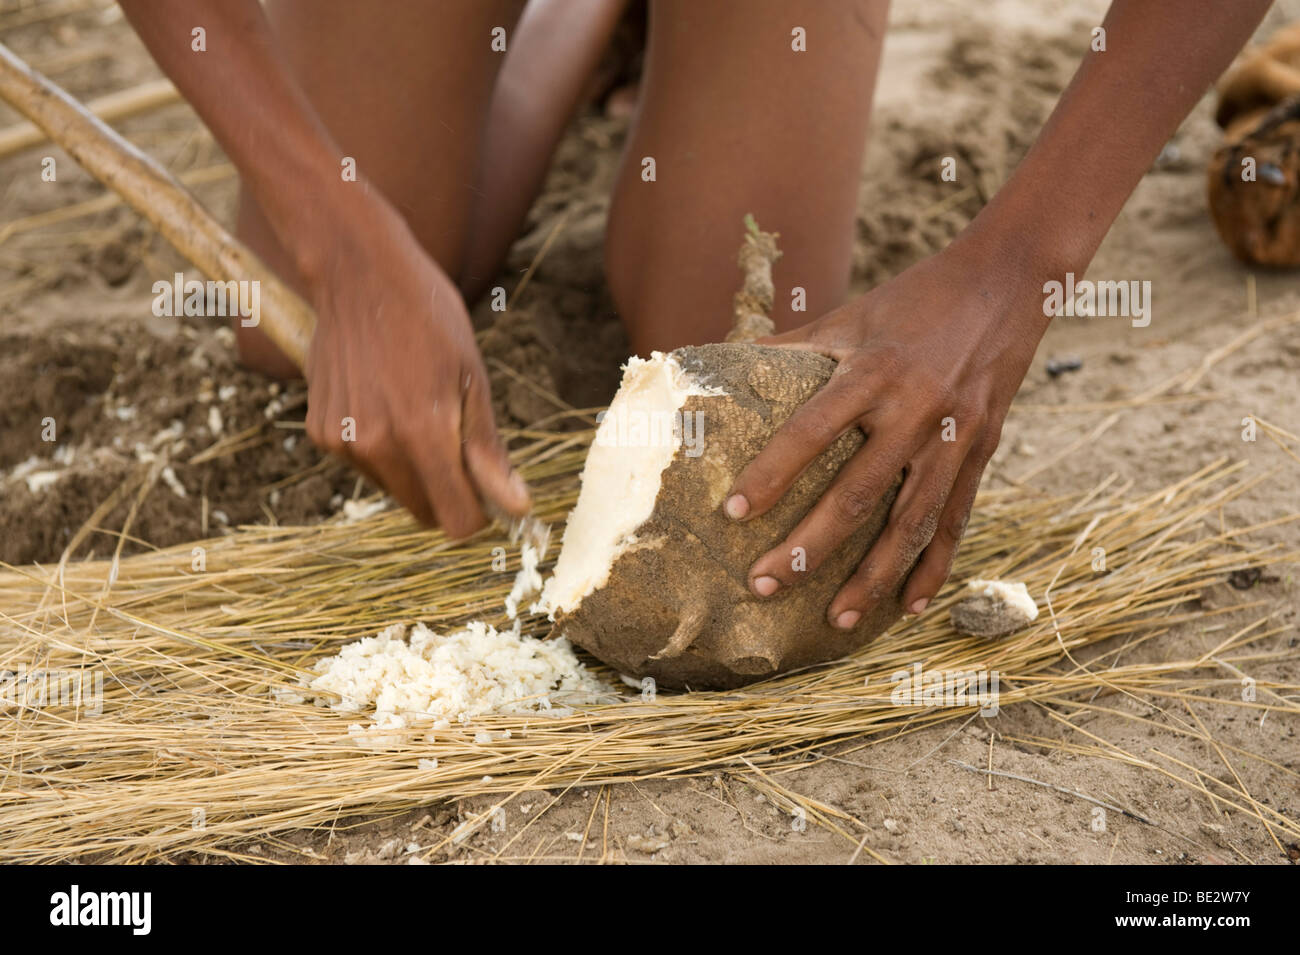 Naro bushman (San) using milkplant root (Raphionacme burkei) for water, Central Kalahari, Botswana Stock Photo